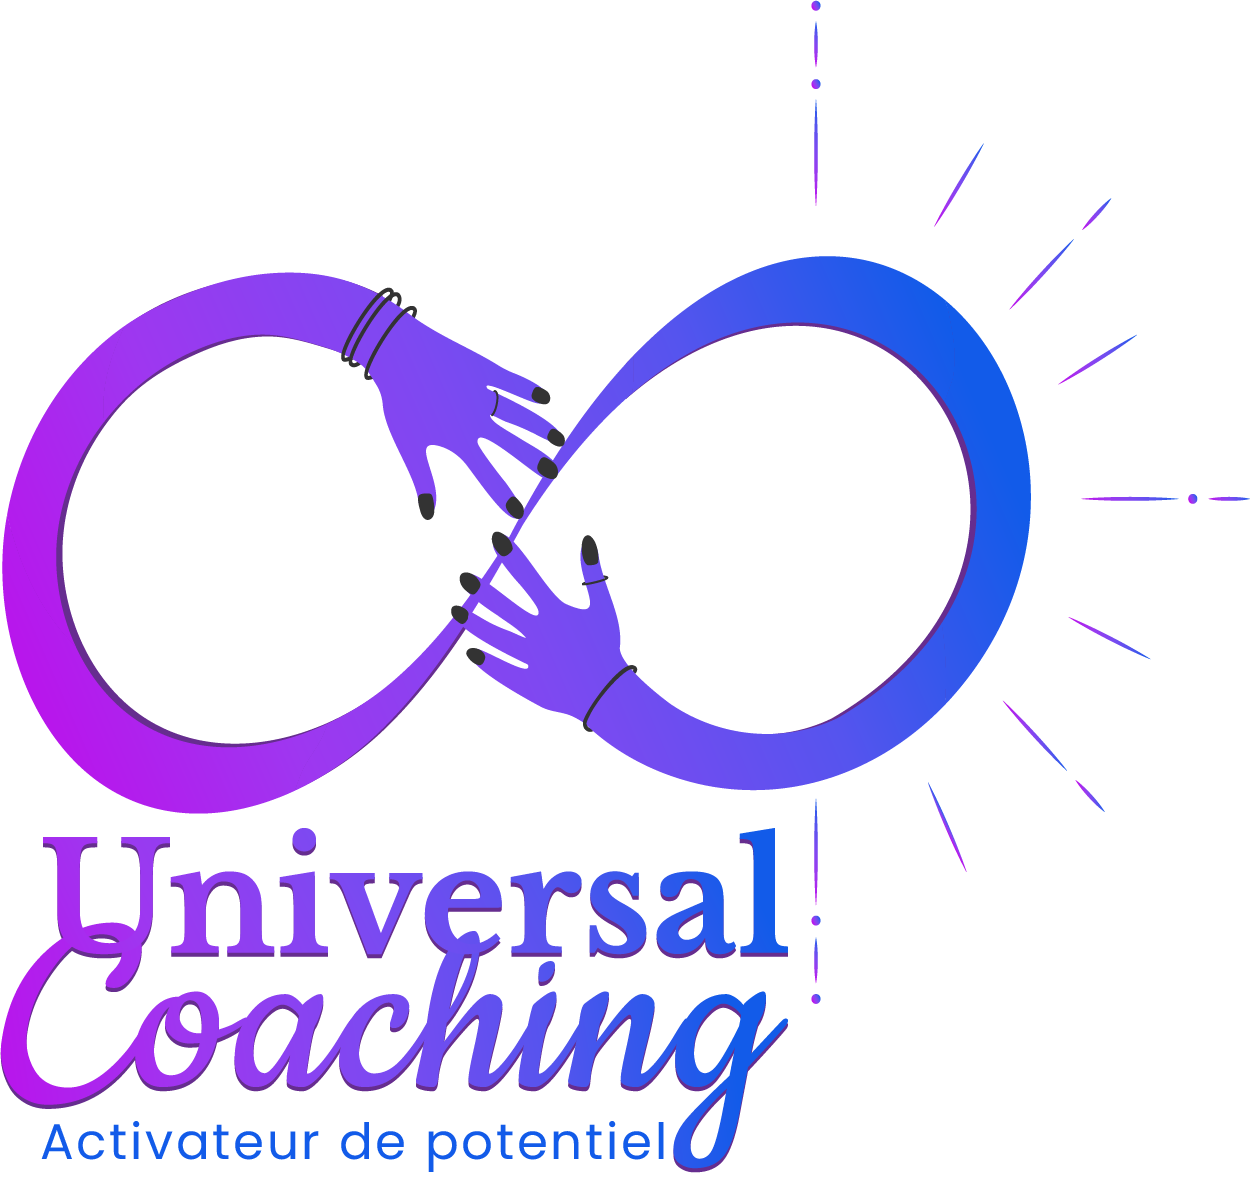 Universal Coaching